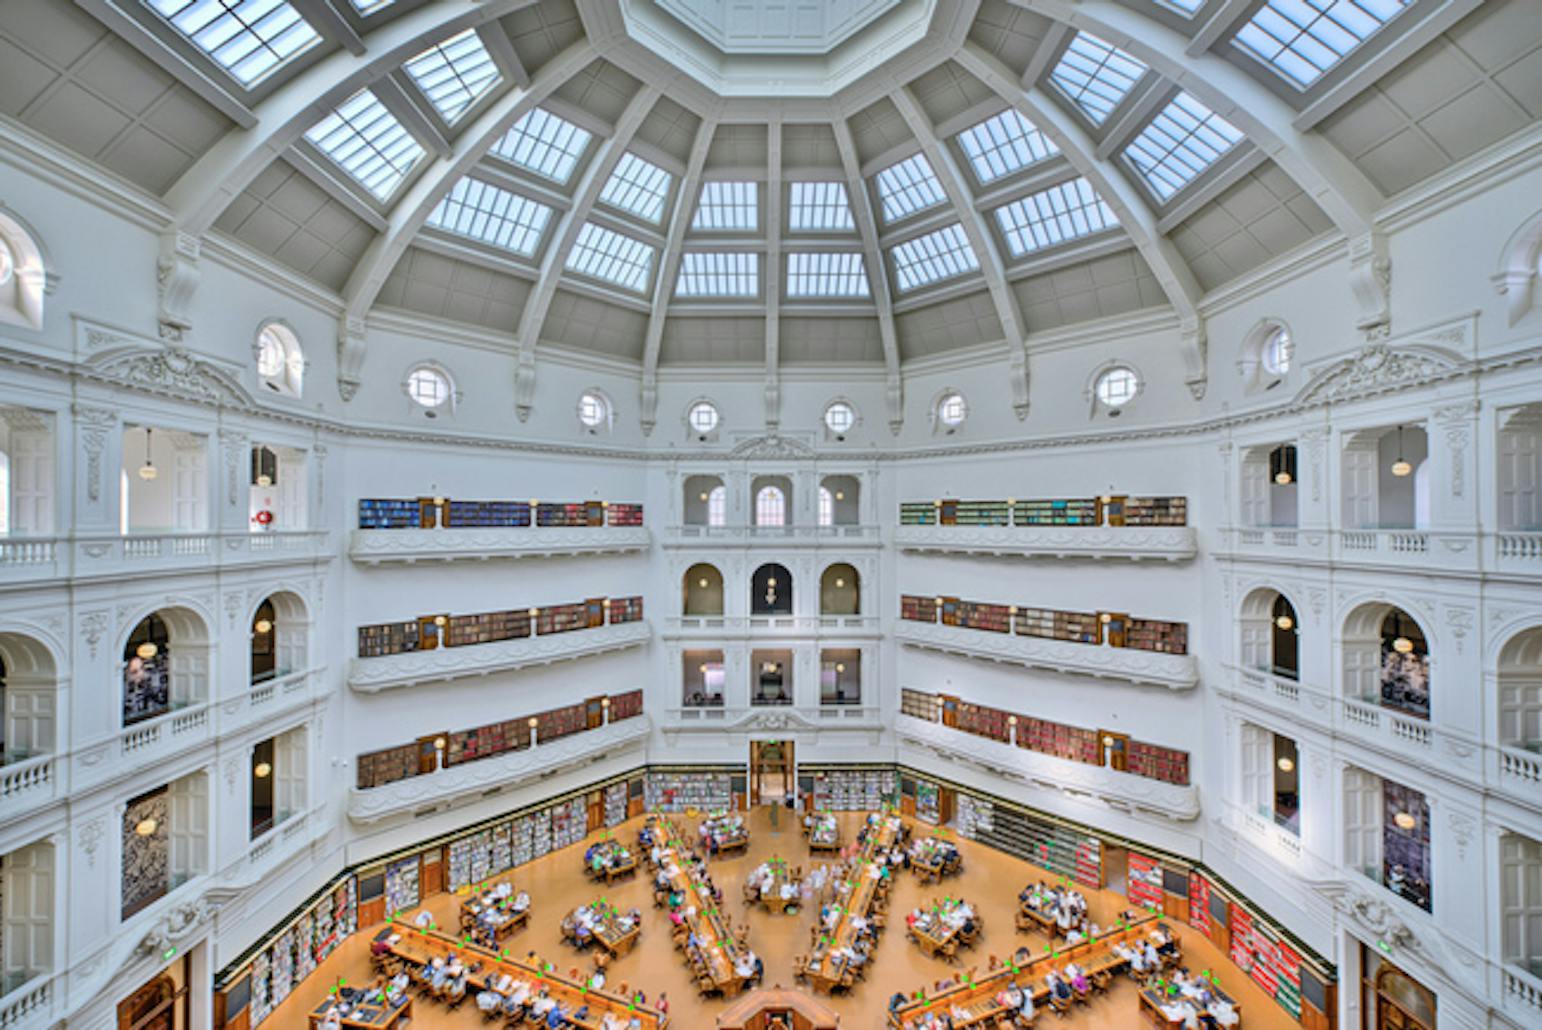 State library. Публичная библиотека. Публичная библиотека Нью-Йорка. Публичные библиотеки США. Публичные библиотеки в Мумбаи.